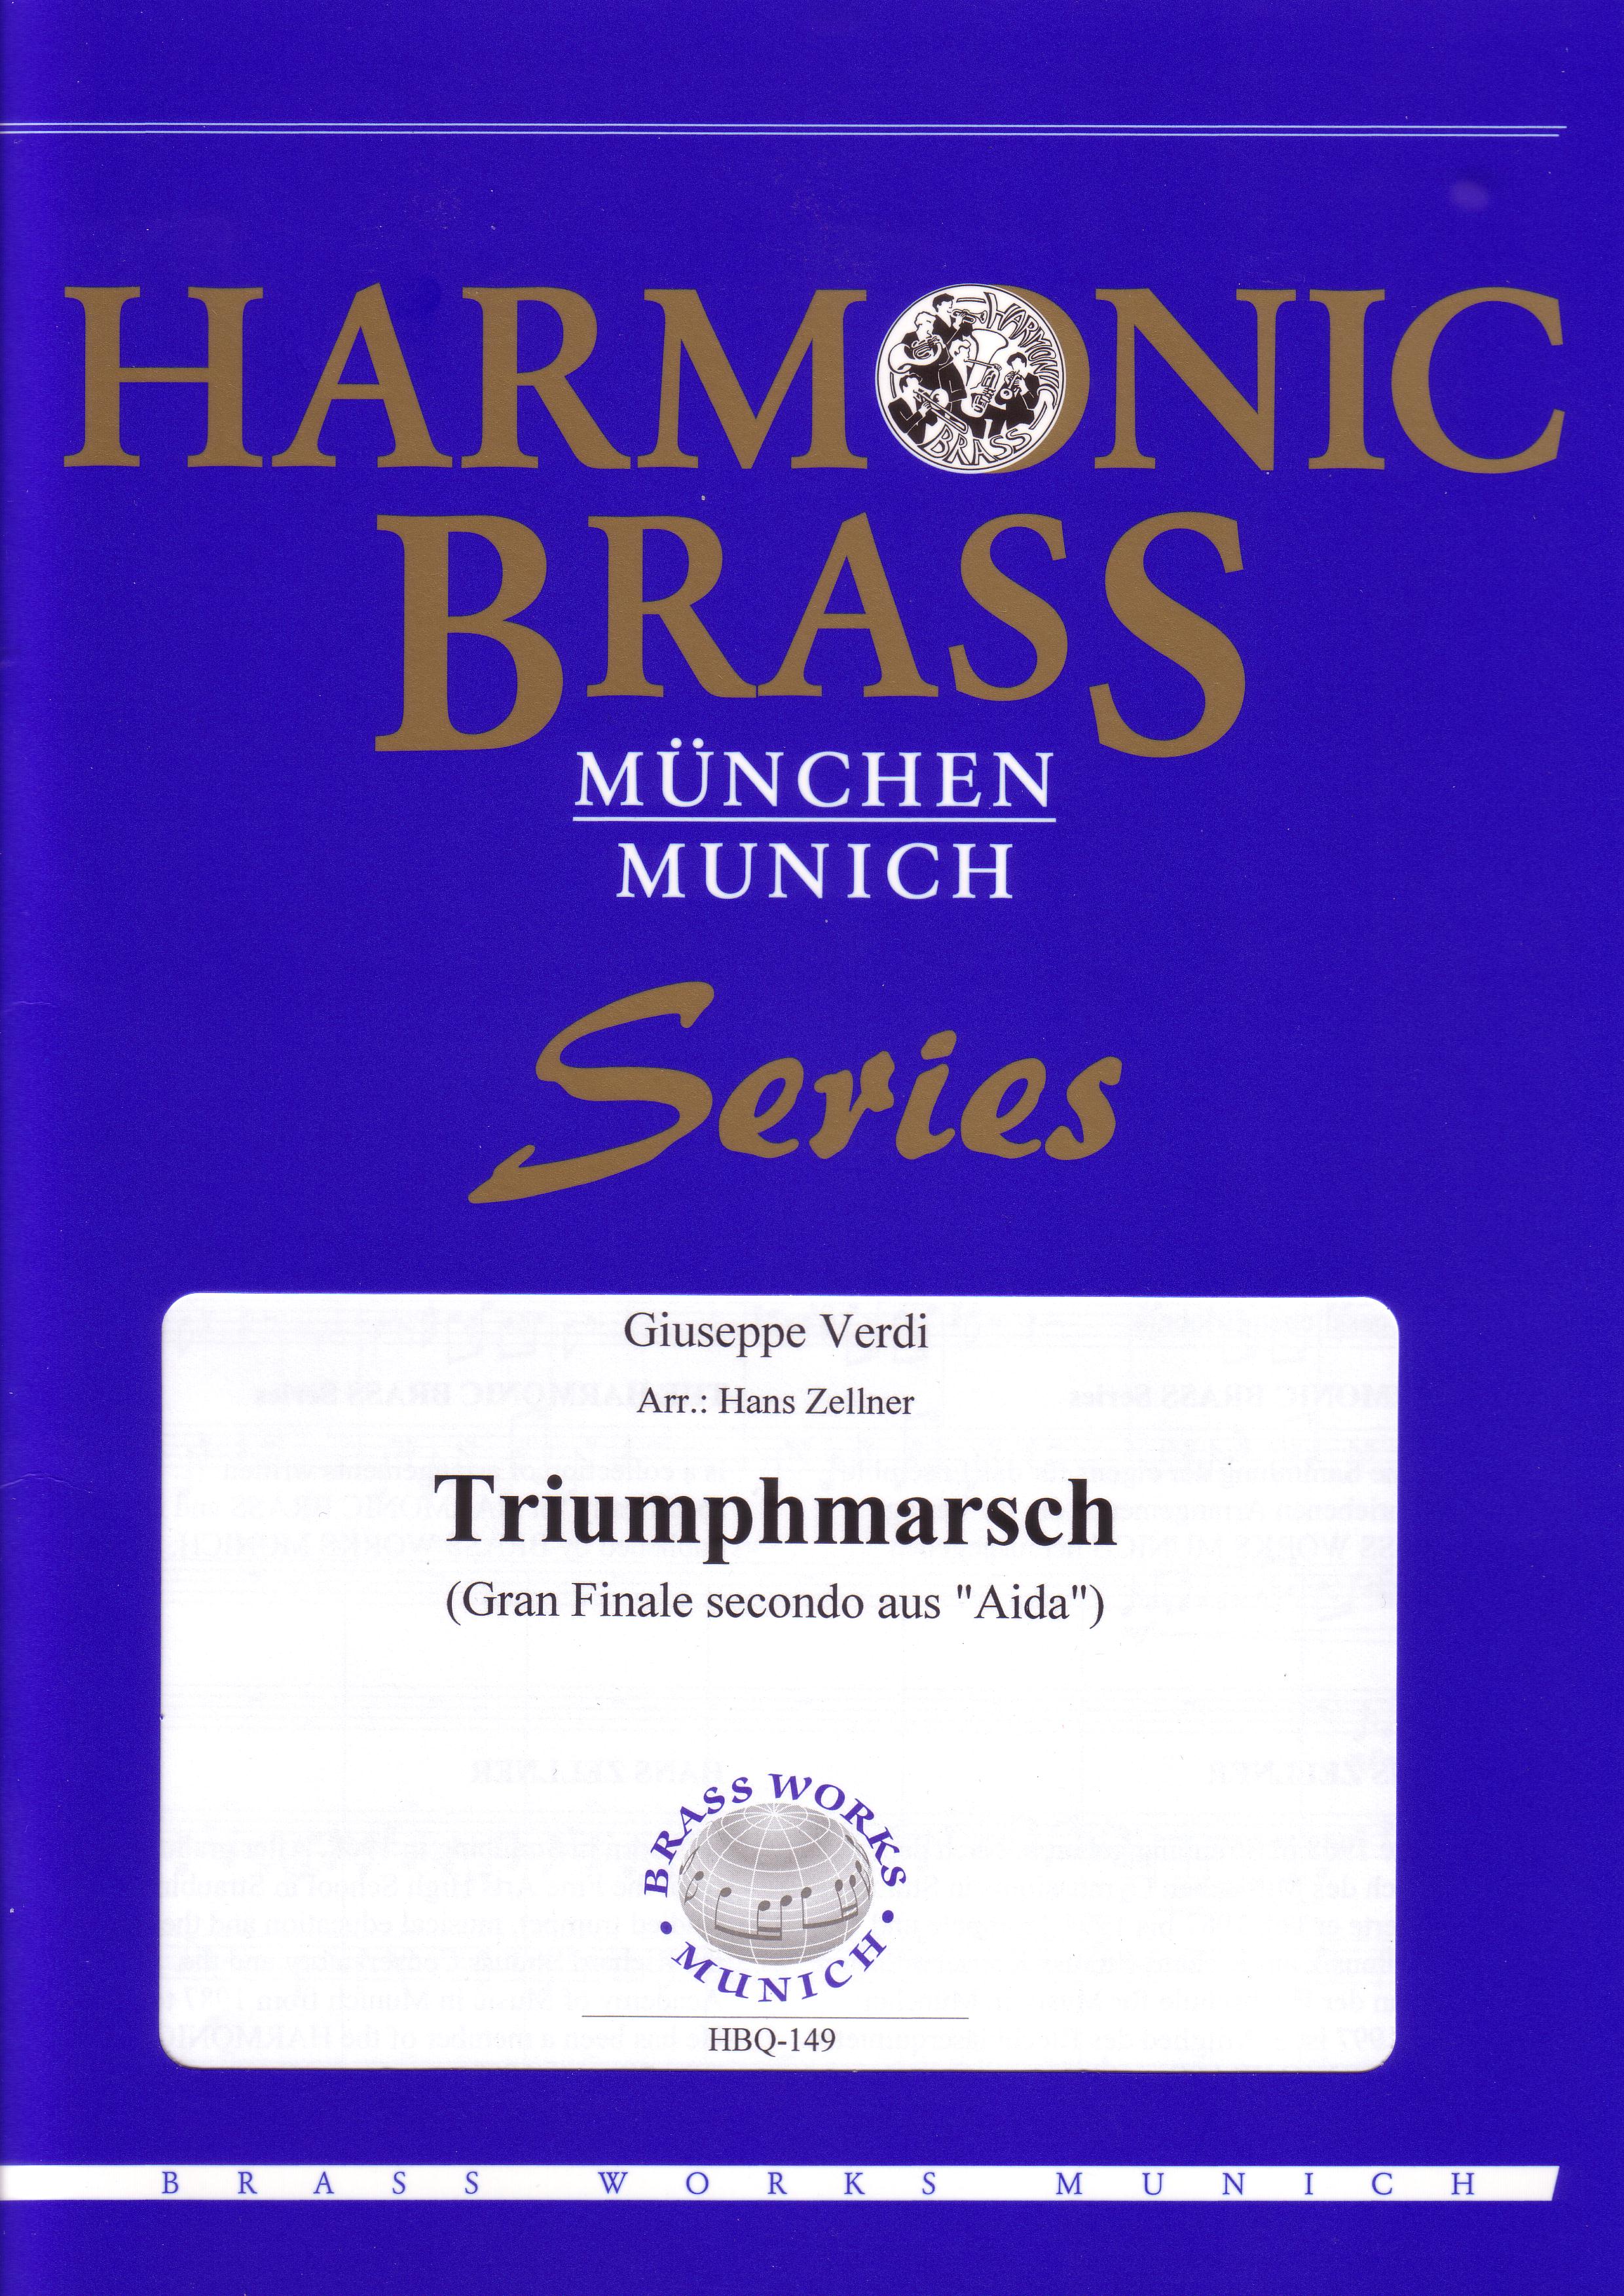 GRAND MARCH (Triumphmarsch) from Aida score & parts